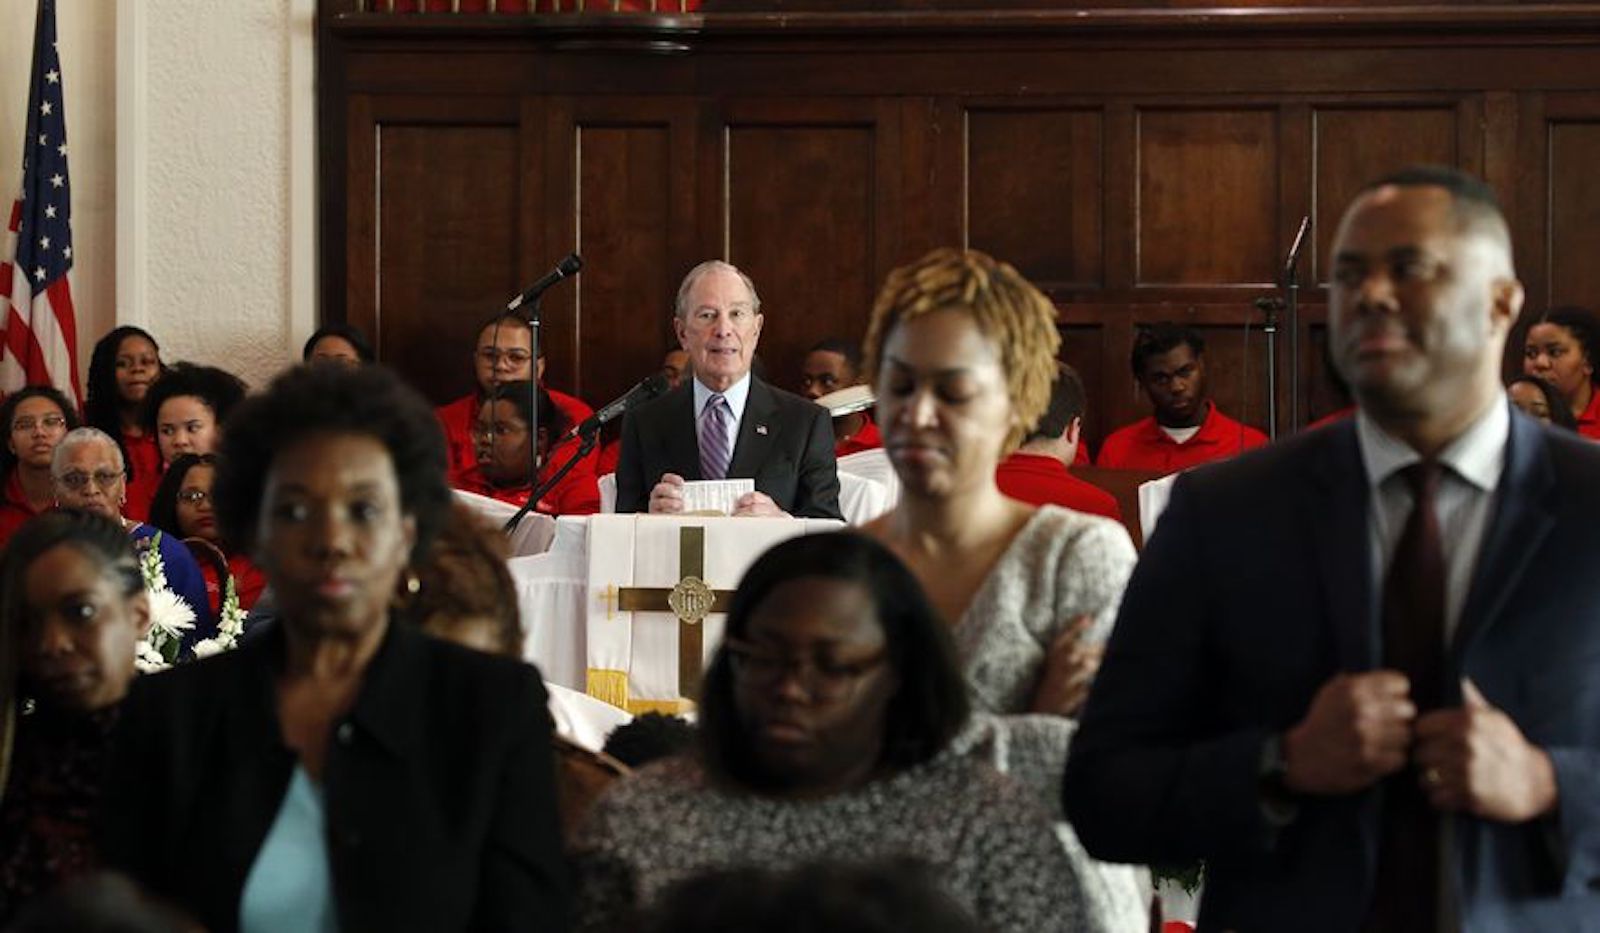 Black church snubs Bloomberg as congregants stand, turn their backs | The Washington Times